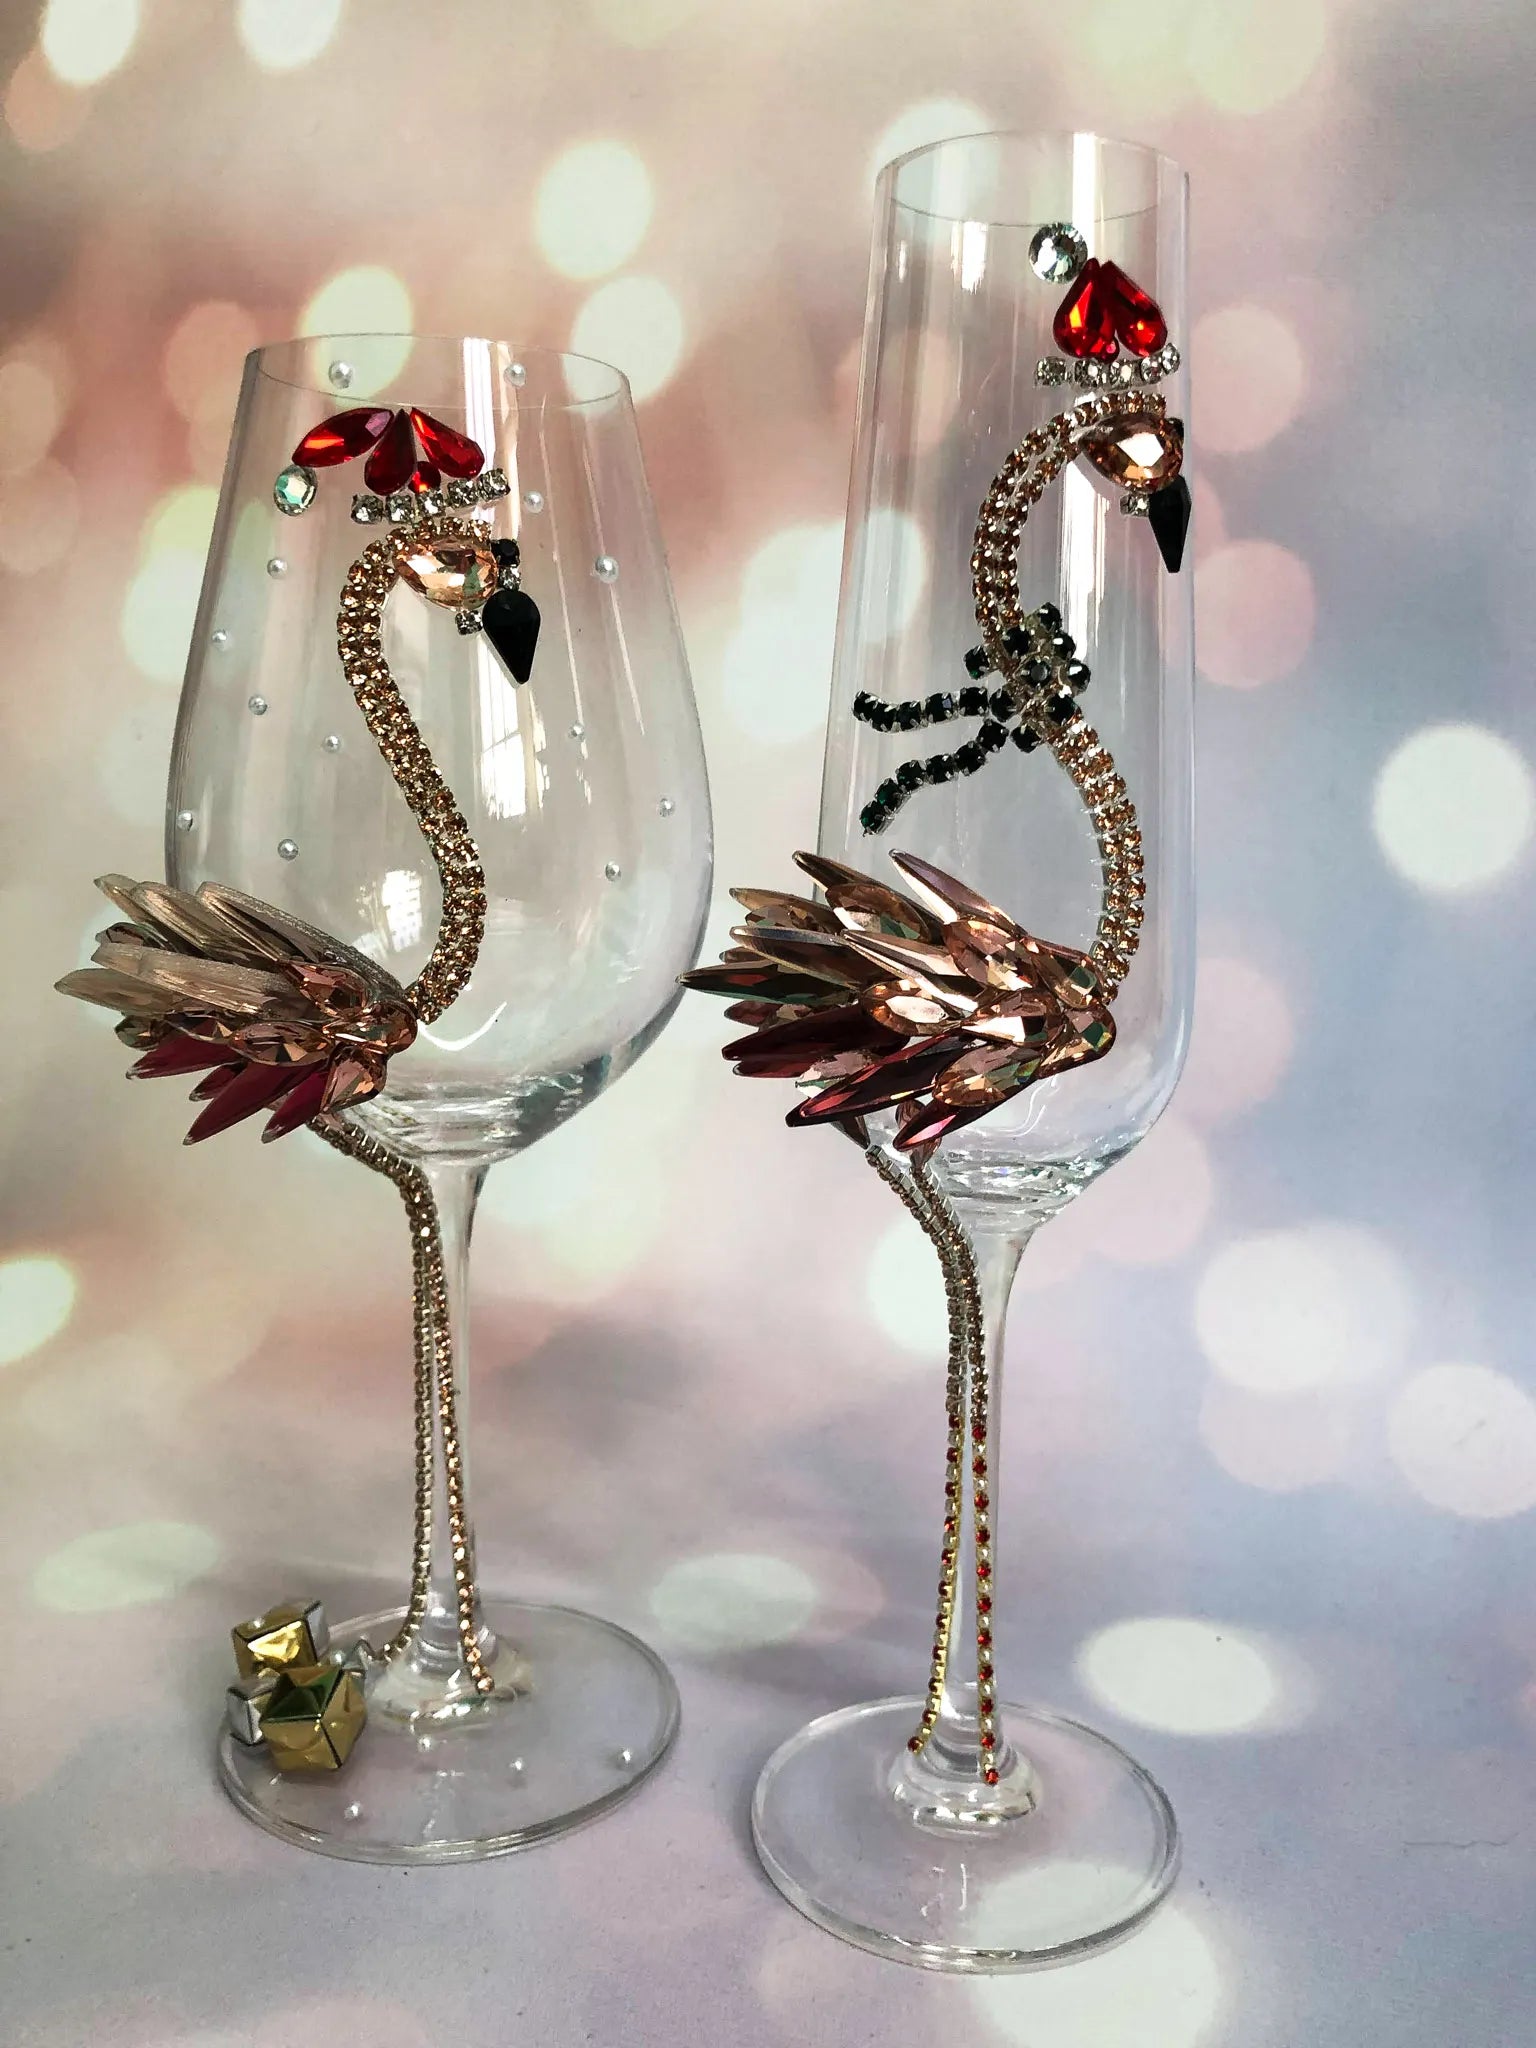 Flamingo-themed holiday drinkware